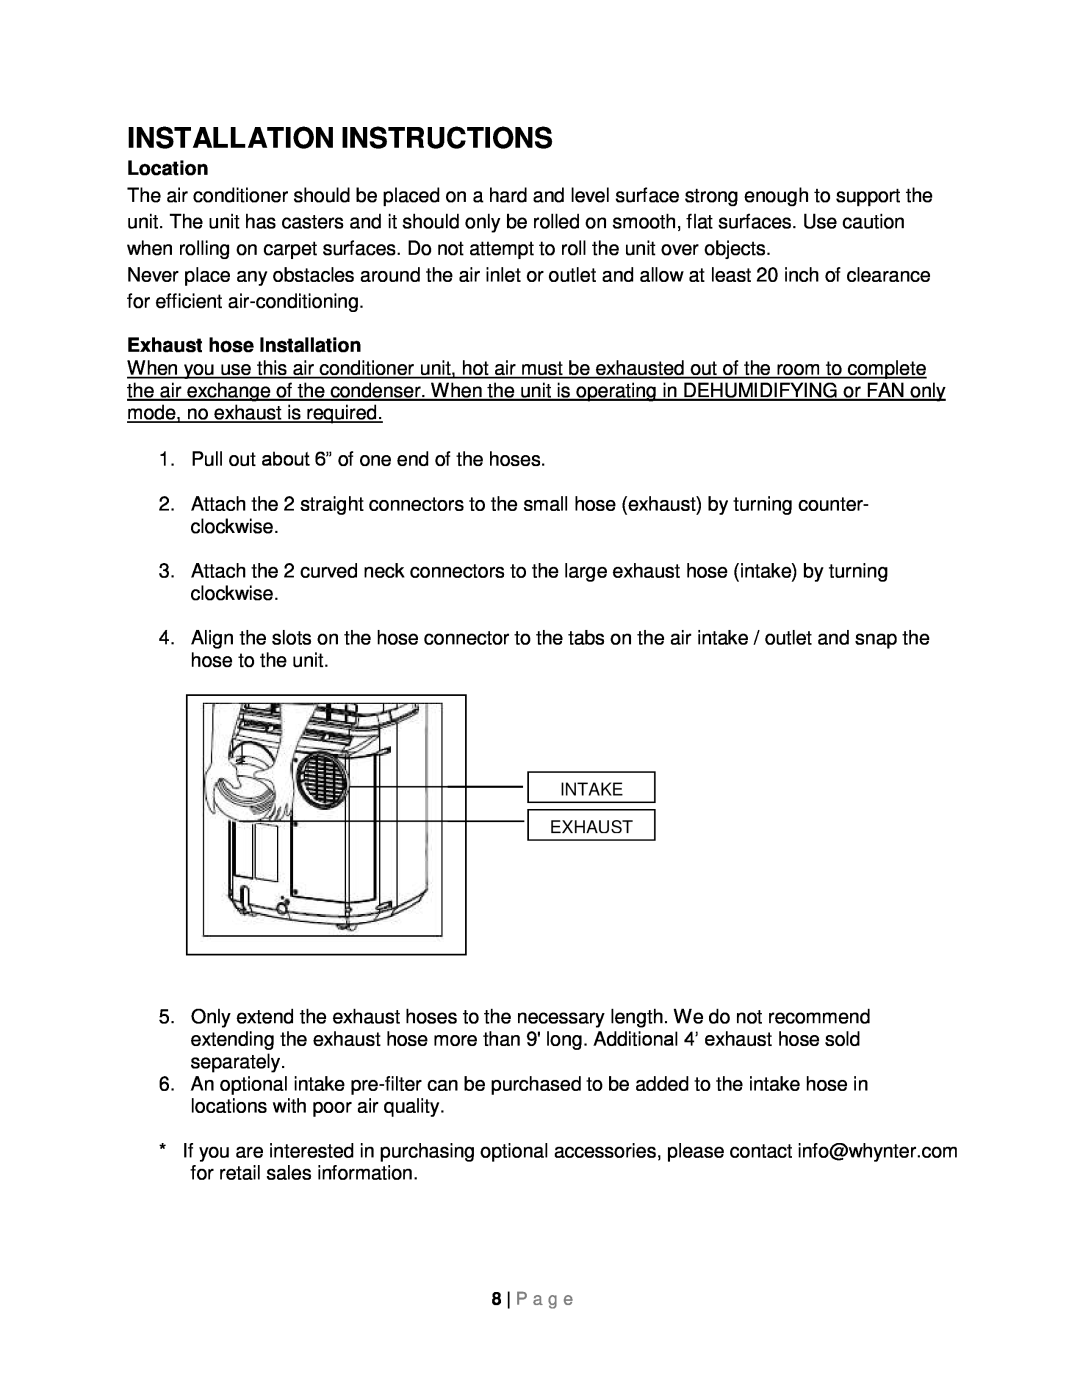 Whynter ARC-131GD instruction manual Installation Instructions, Location, Exhaust hose Installation 